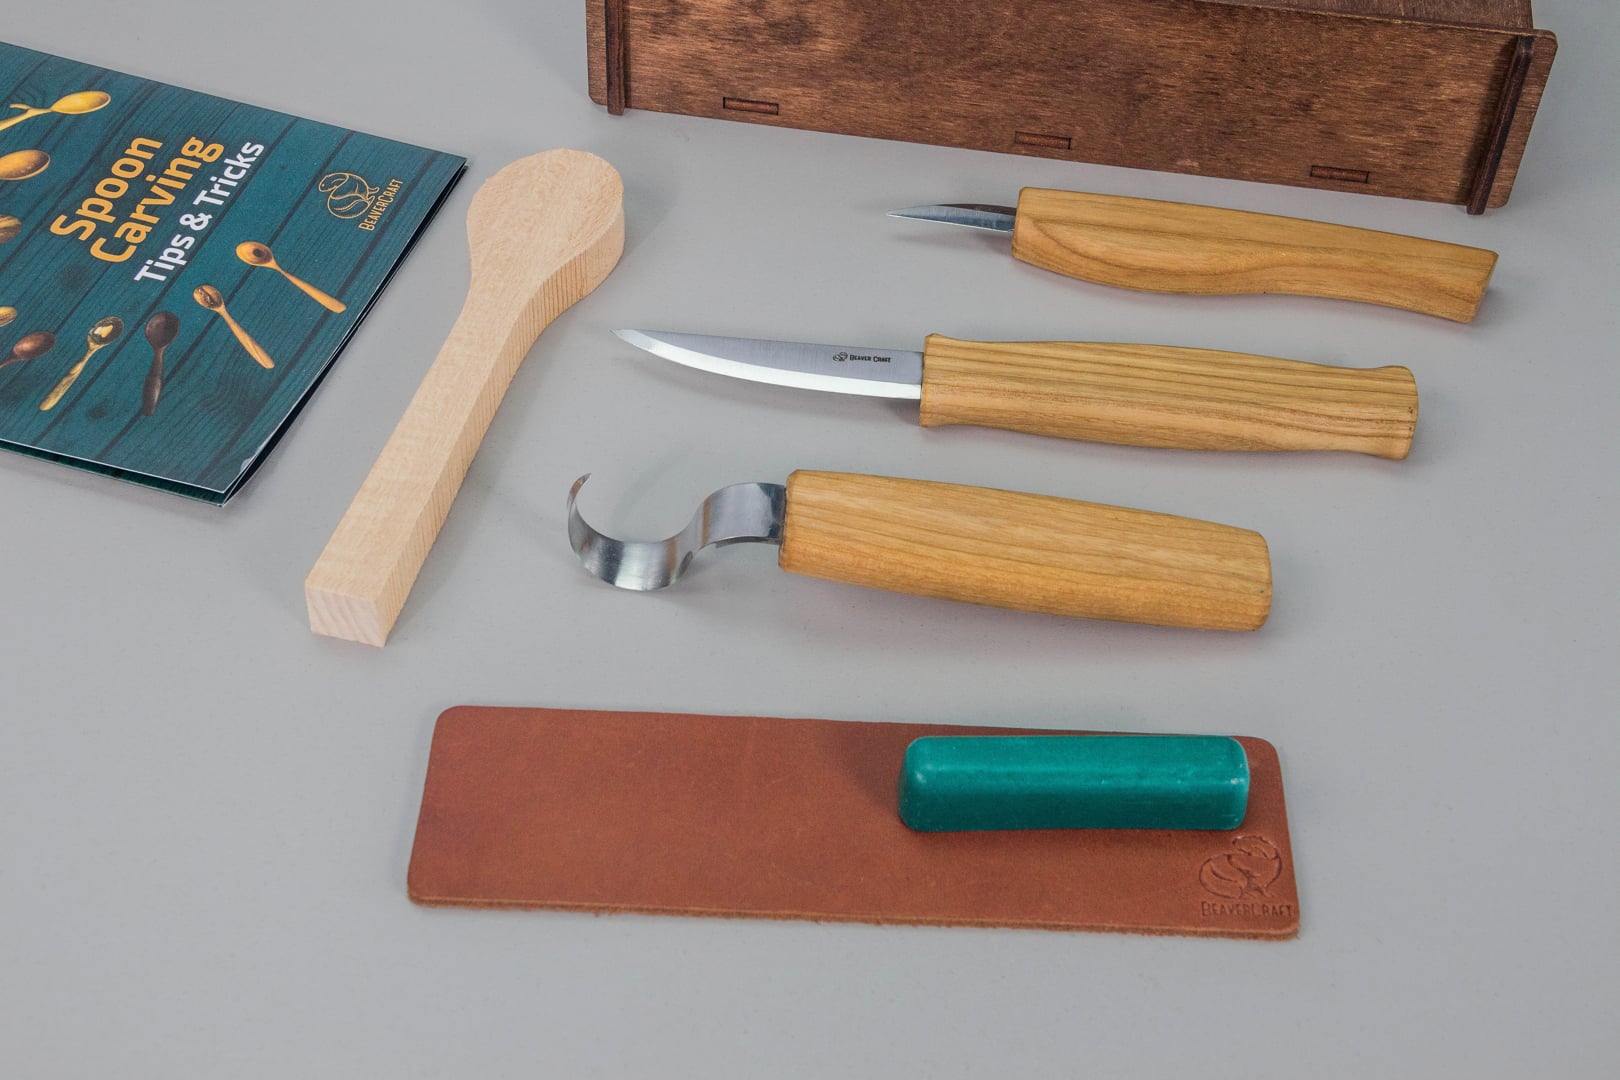 Best beginner spoon carving knife online – BeaverCraft Tools